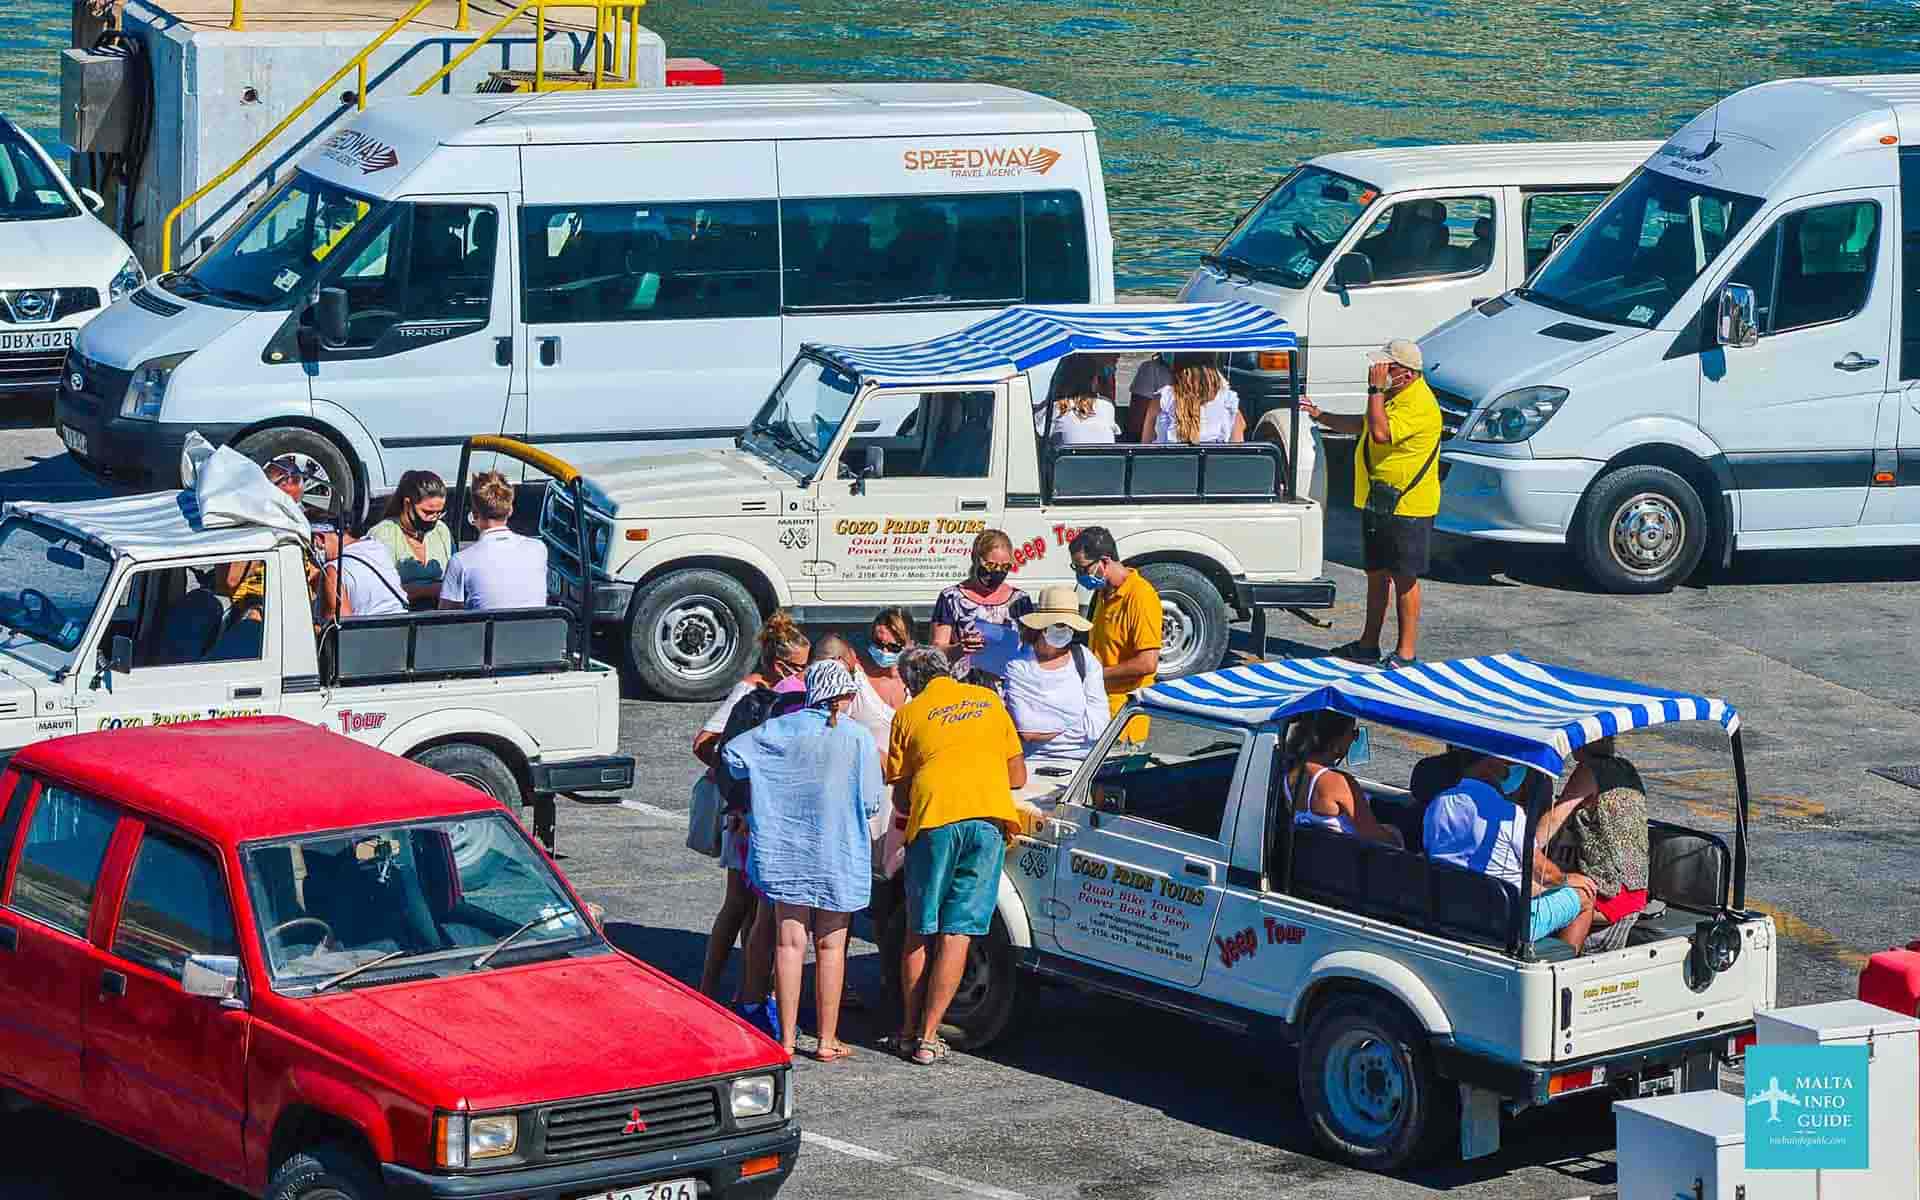 Jeep Safari's waiting at Mgarr Gozo for tourists.